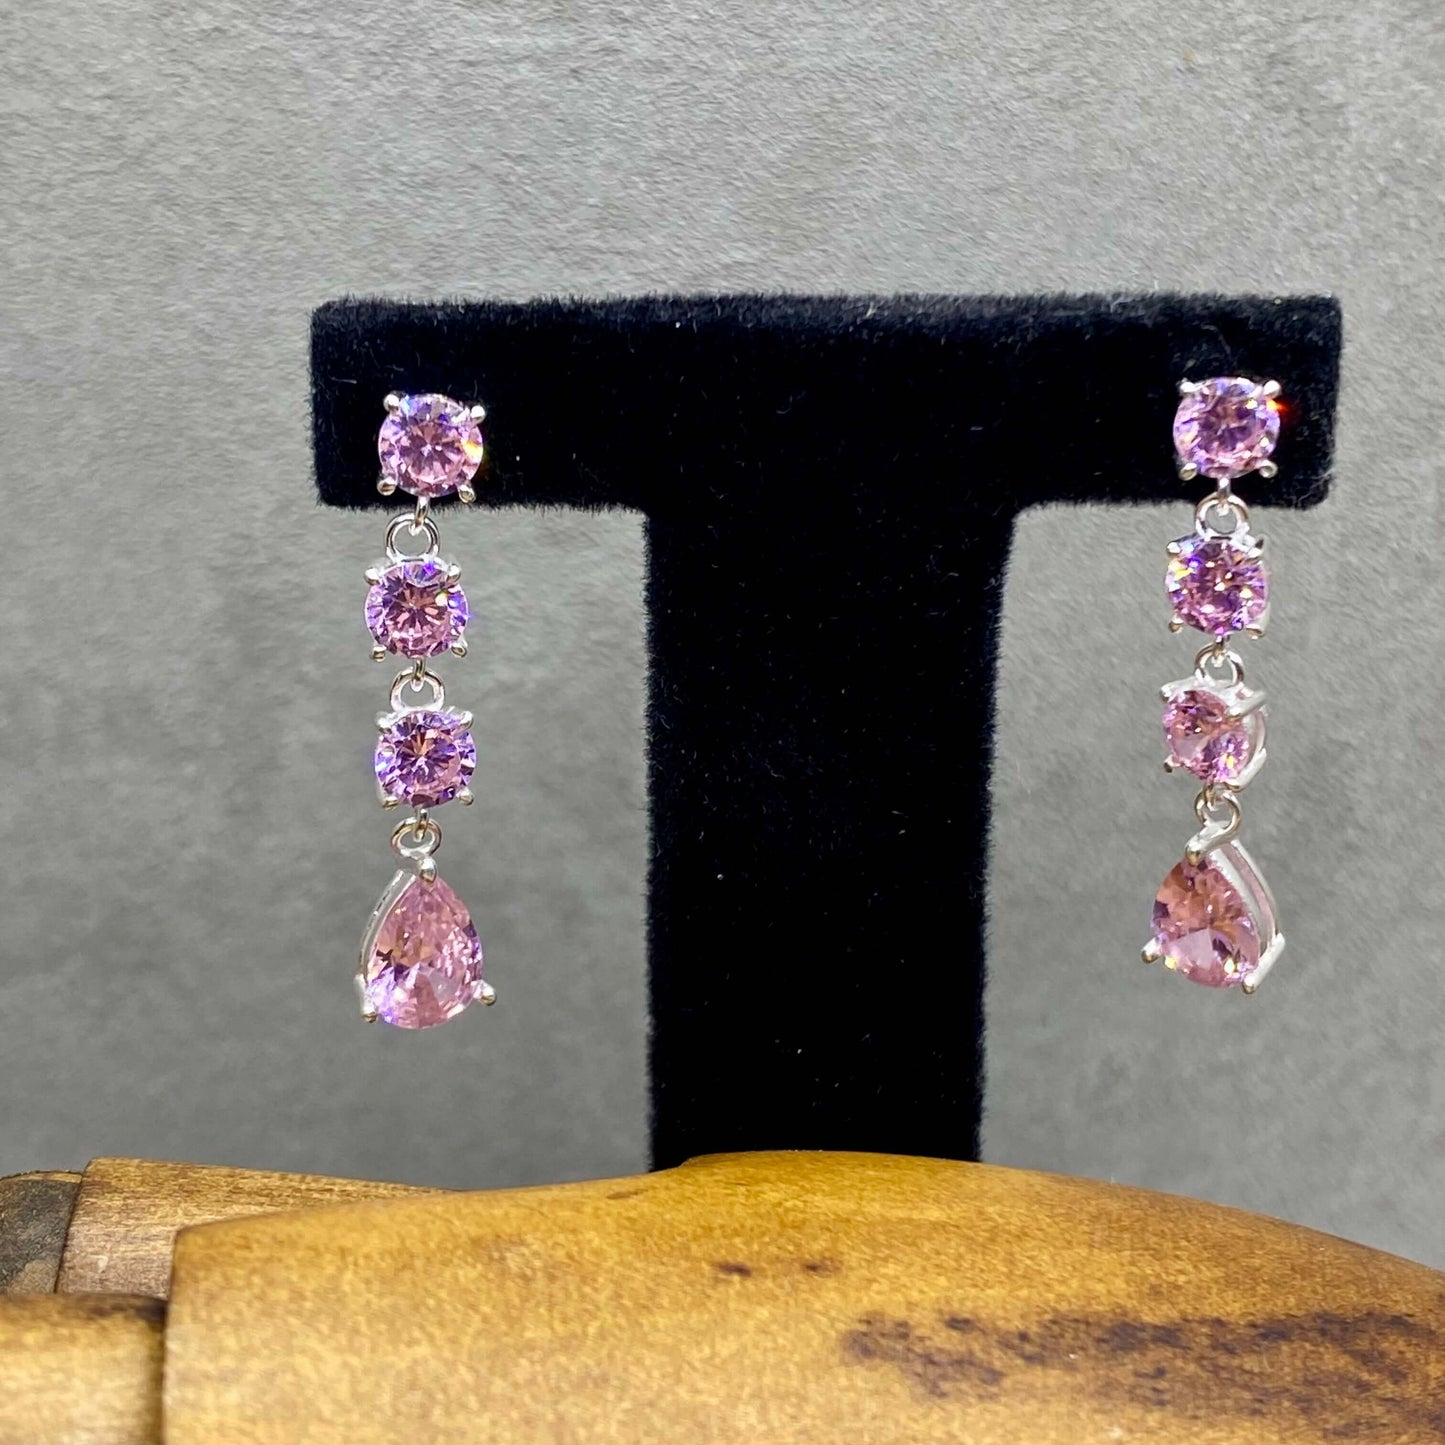 Vibrant Pear Cut Pink Zirconia Drop Earrings - Twelve Silver Trees